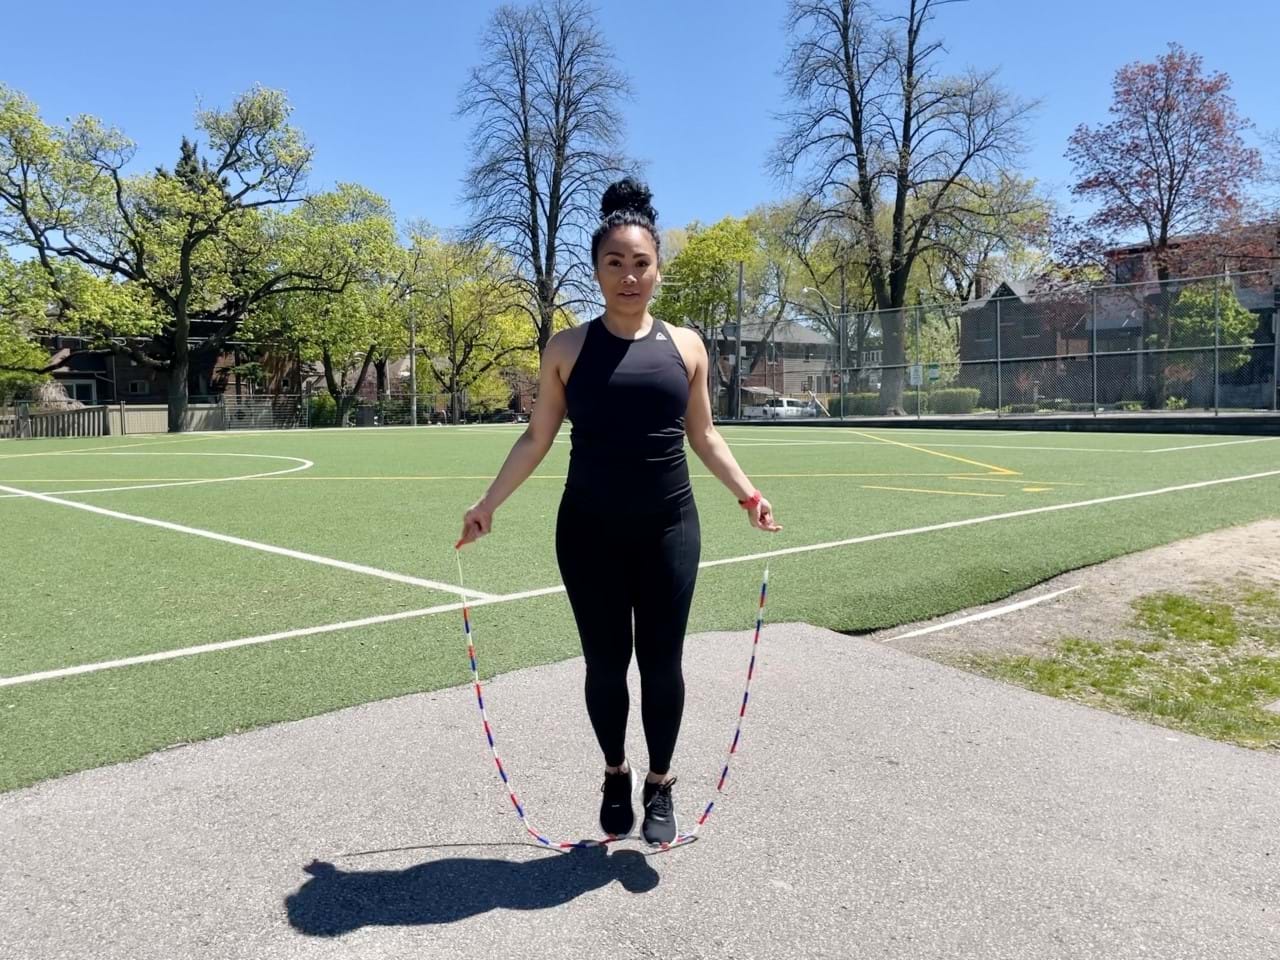 Kathleen Fursey jumps rope in a neighbourhood park in Toronto